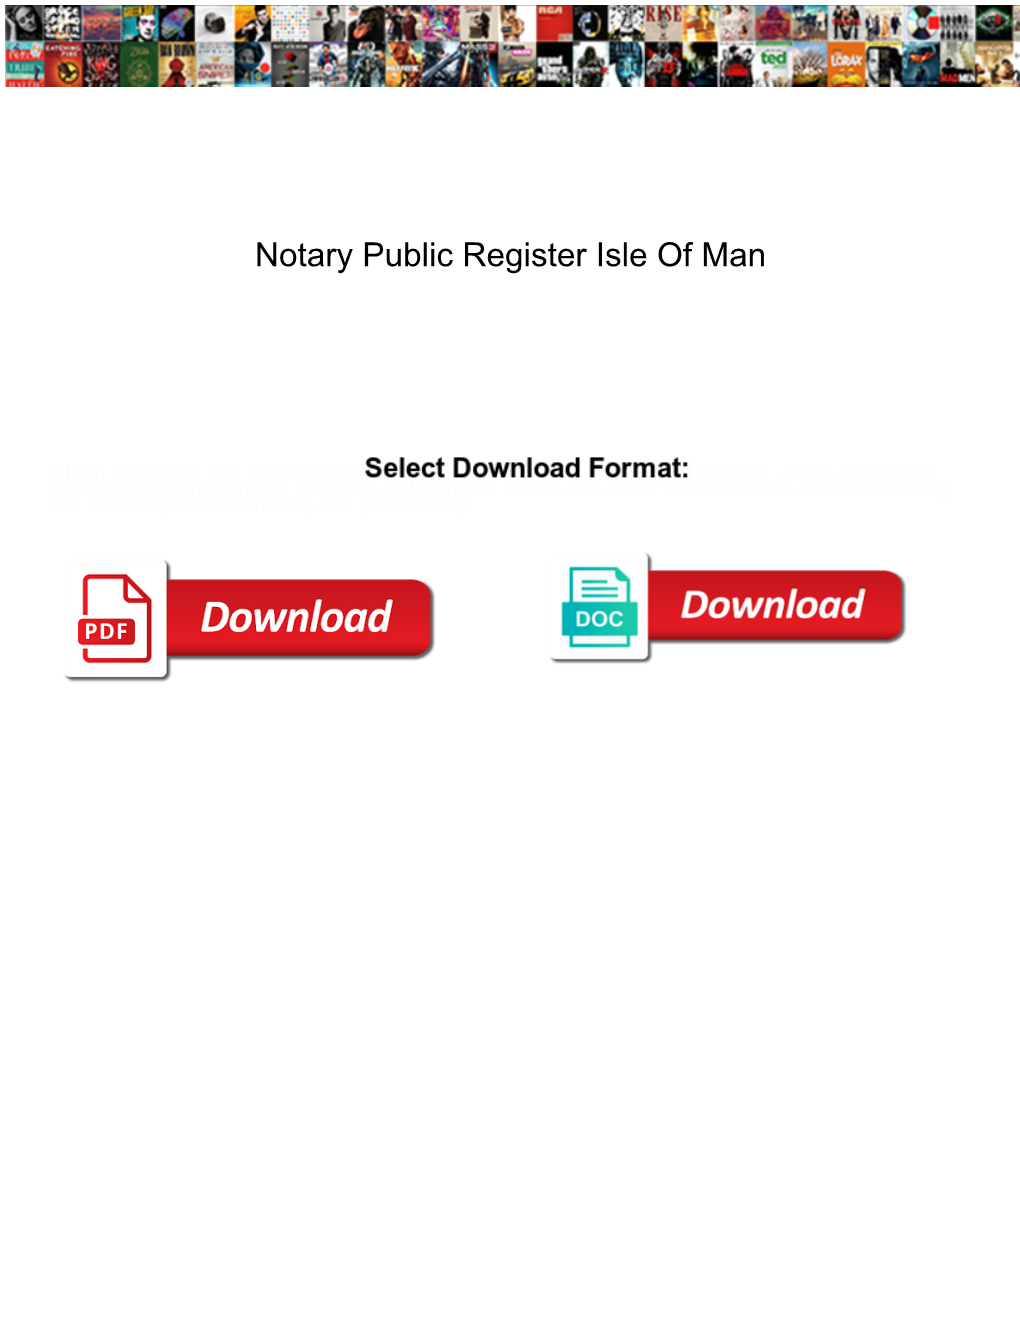 Notary Public Register Isle of Man